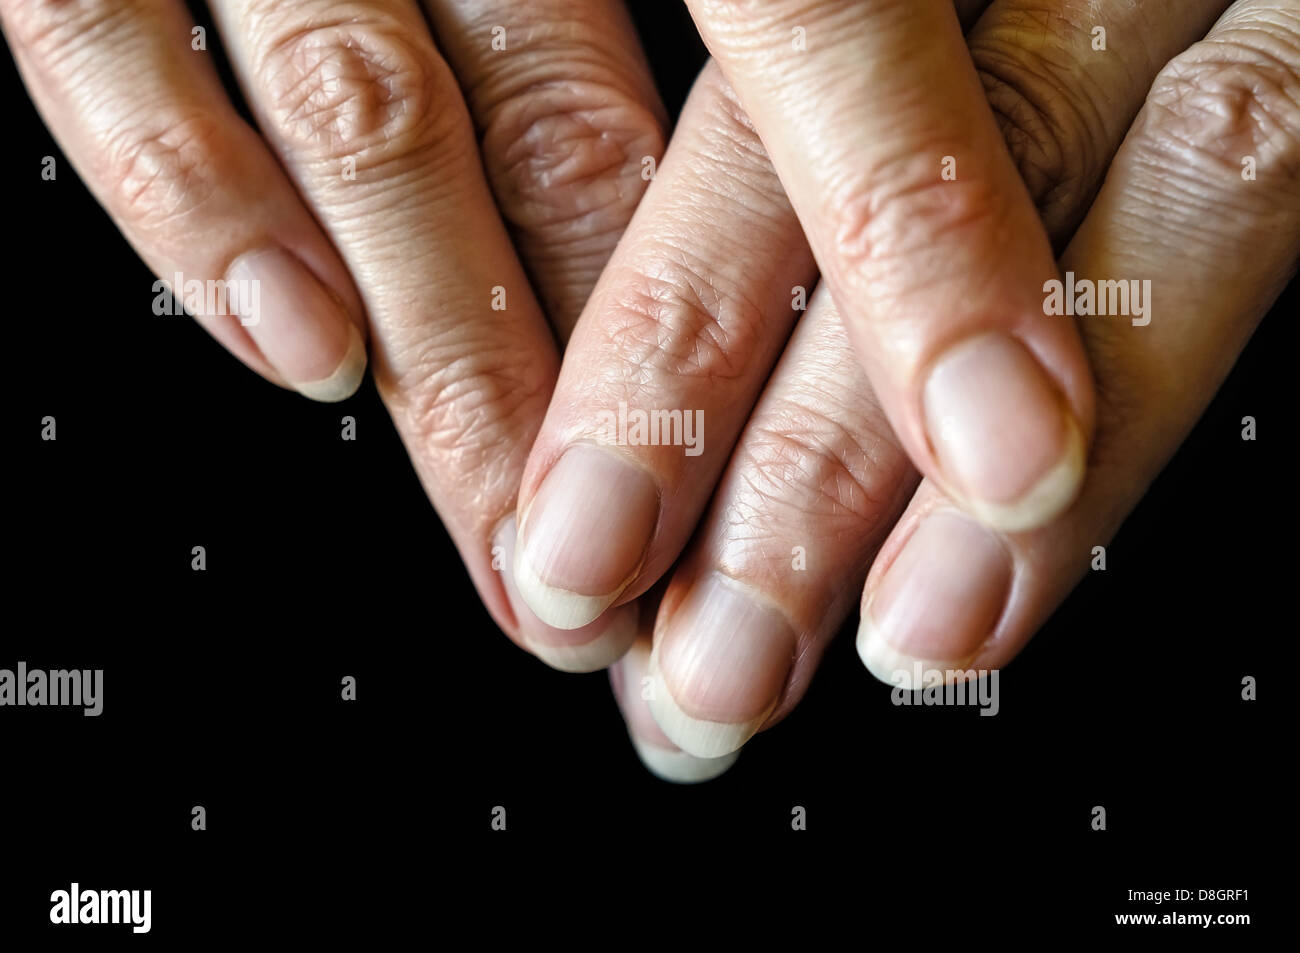 Nice senior woman's fingers on black background Stock Photo